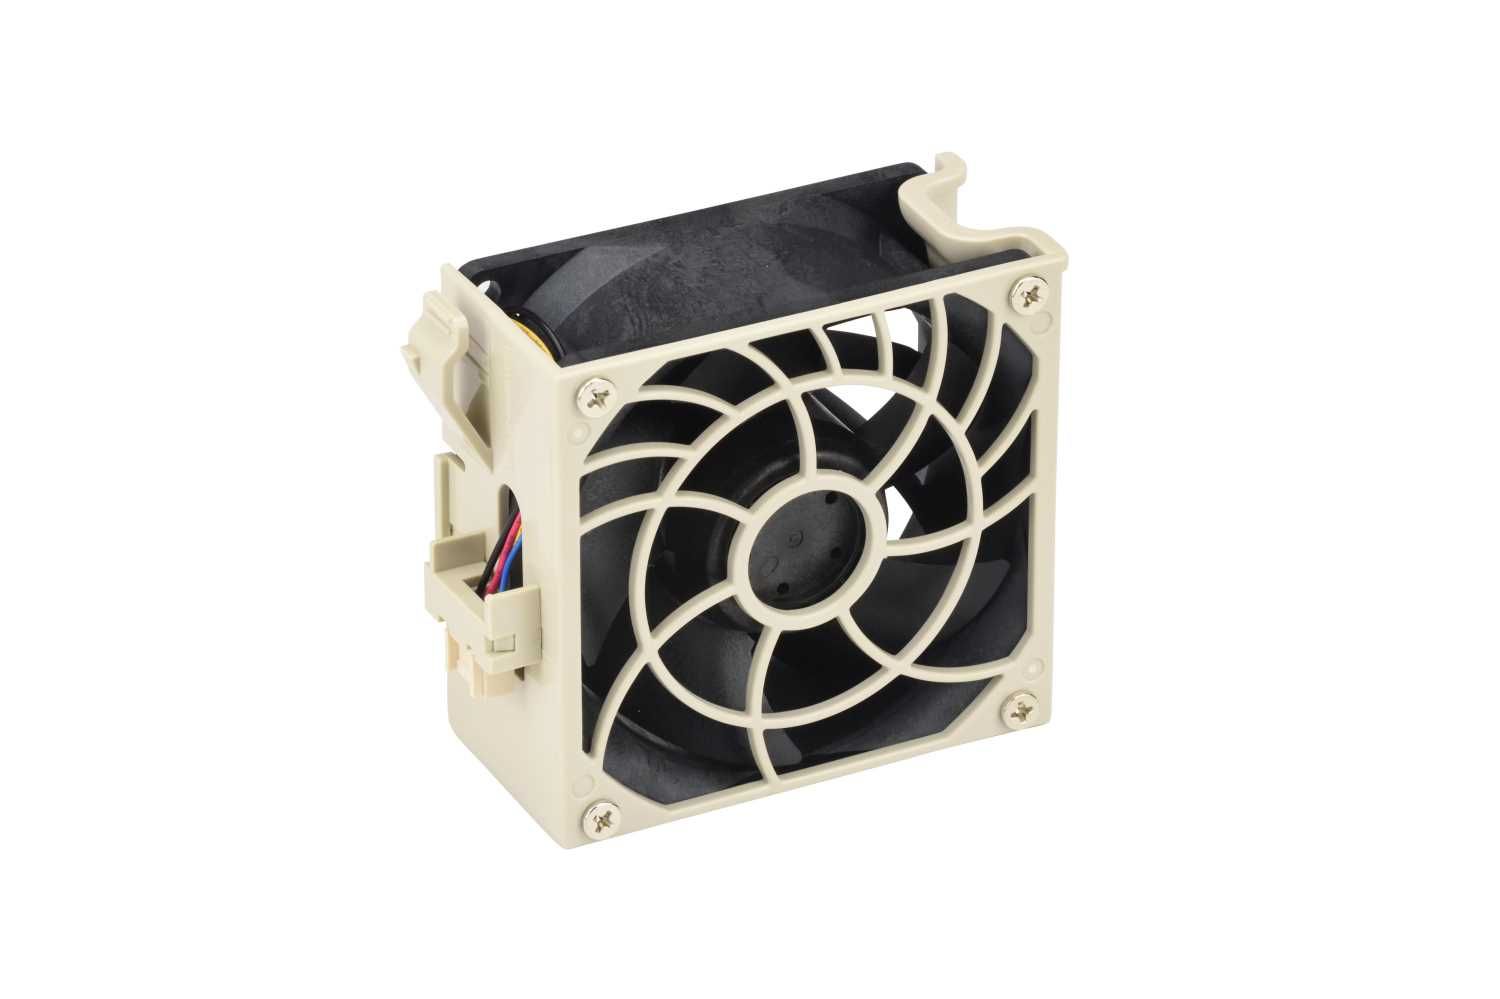 Вентилятор для корпуса Supermicro FAN-0181L4 вентилятор охлаждения вотсмайнер whatsminer 7 2а разъём 6pin